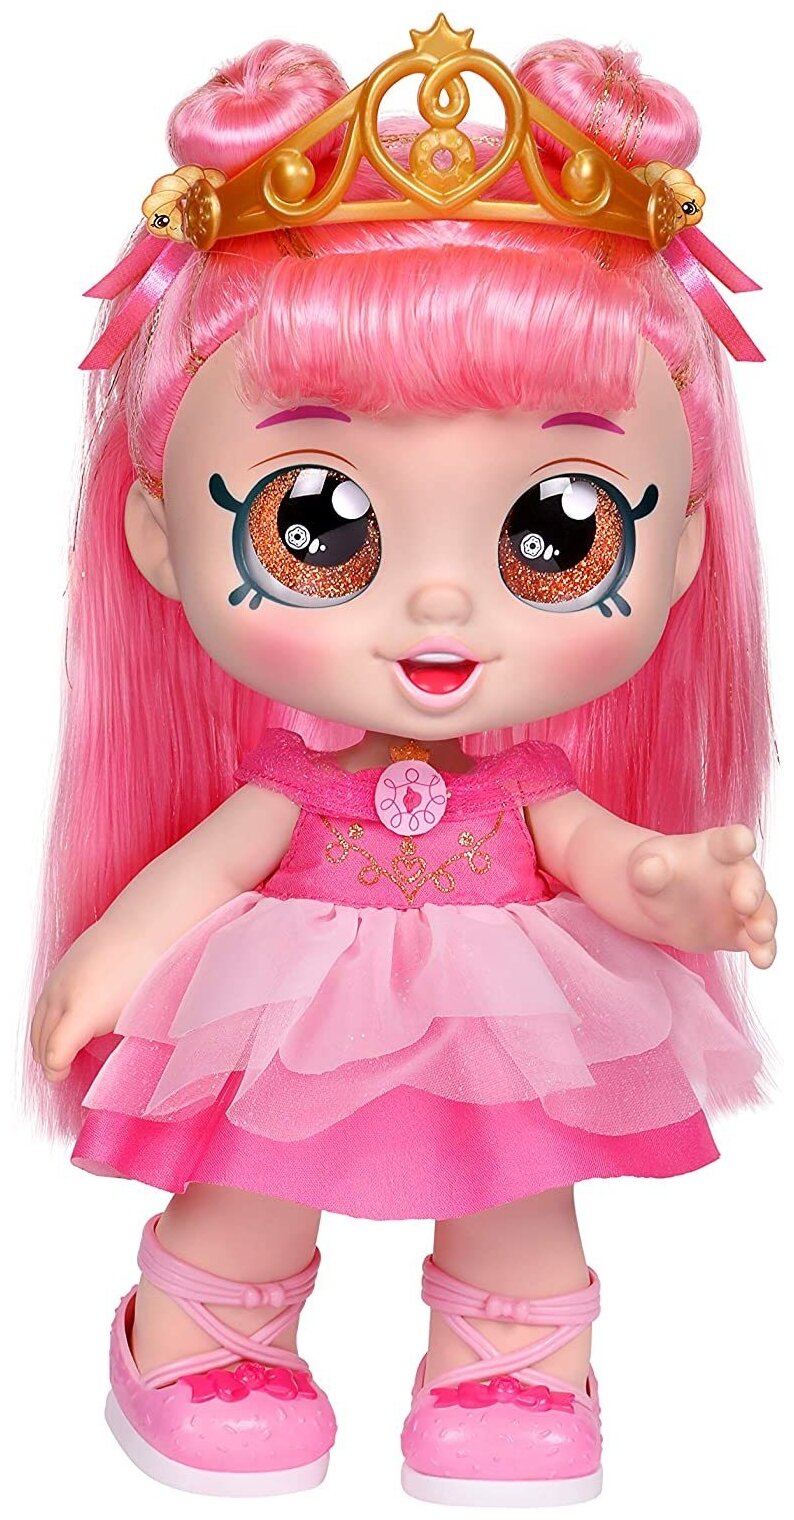 Кукла Kindi Kids Dress Up Friends Донатина Принцесса, 25 см, 38835